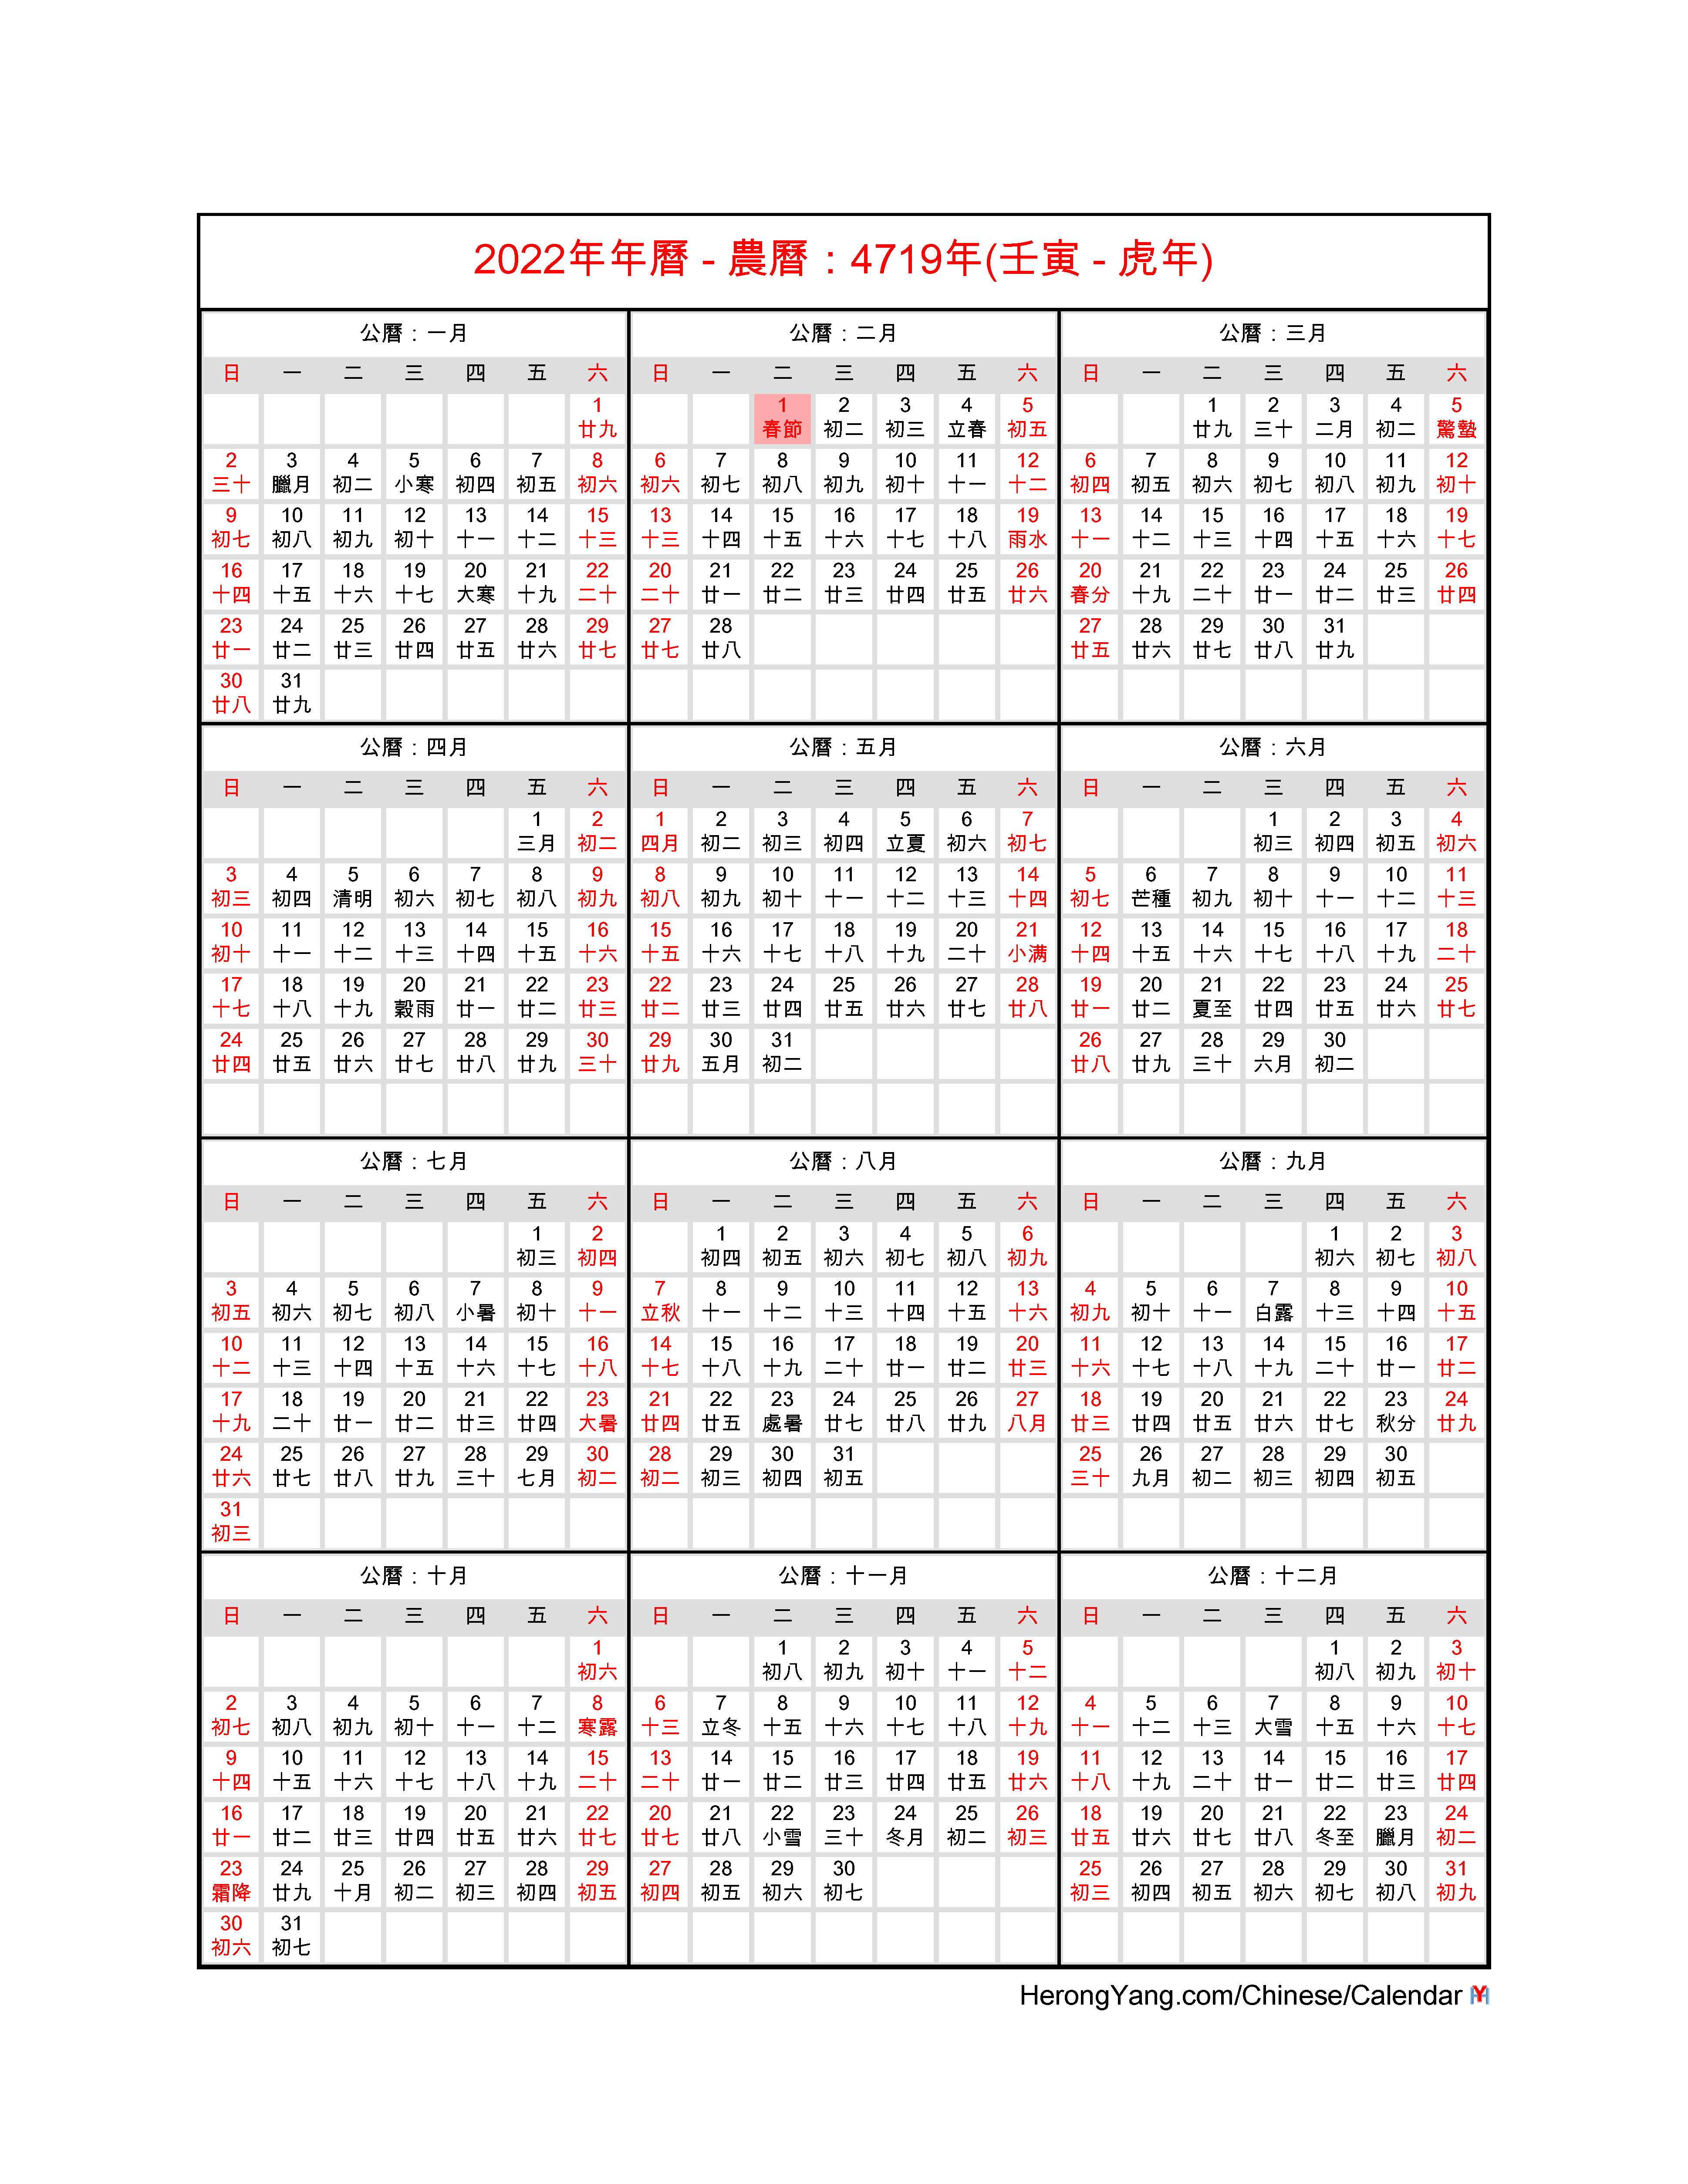 Lunar Year Calendar 2022 Free Chinese Calendar 2022 - Year Of The Tiger